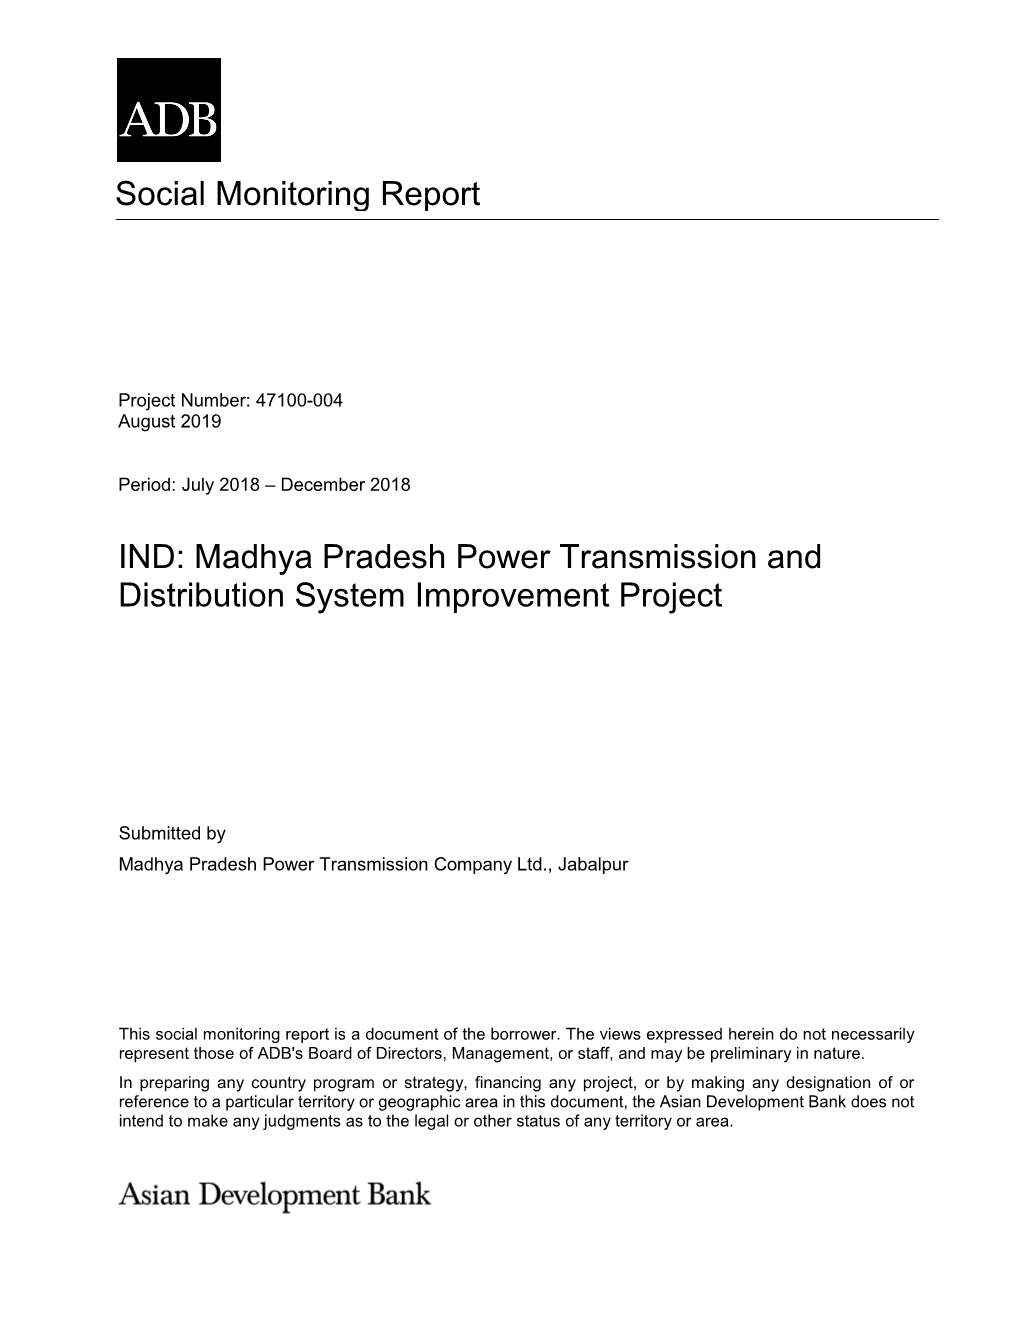 Social Monitoring Report IND: Madhya Pradesh Power Transmission And